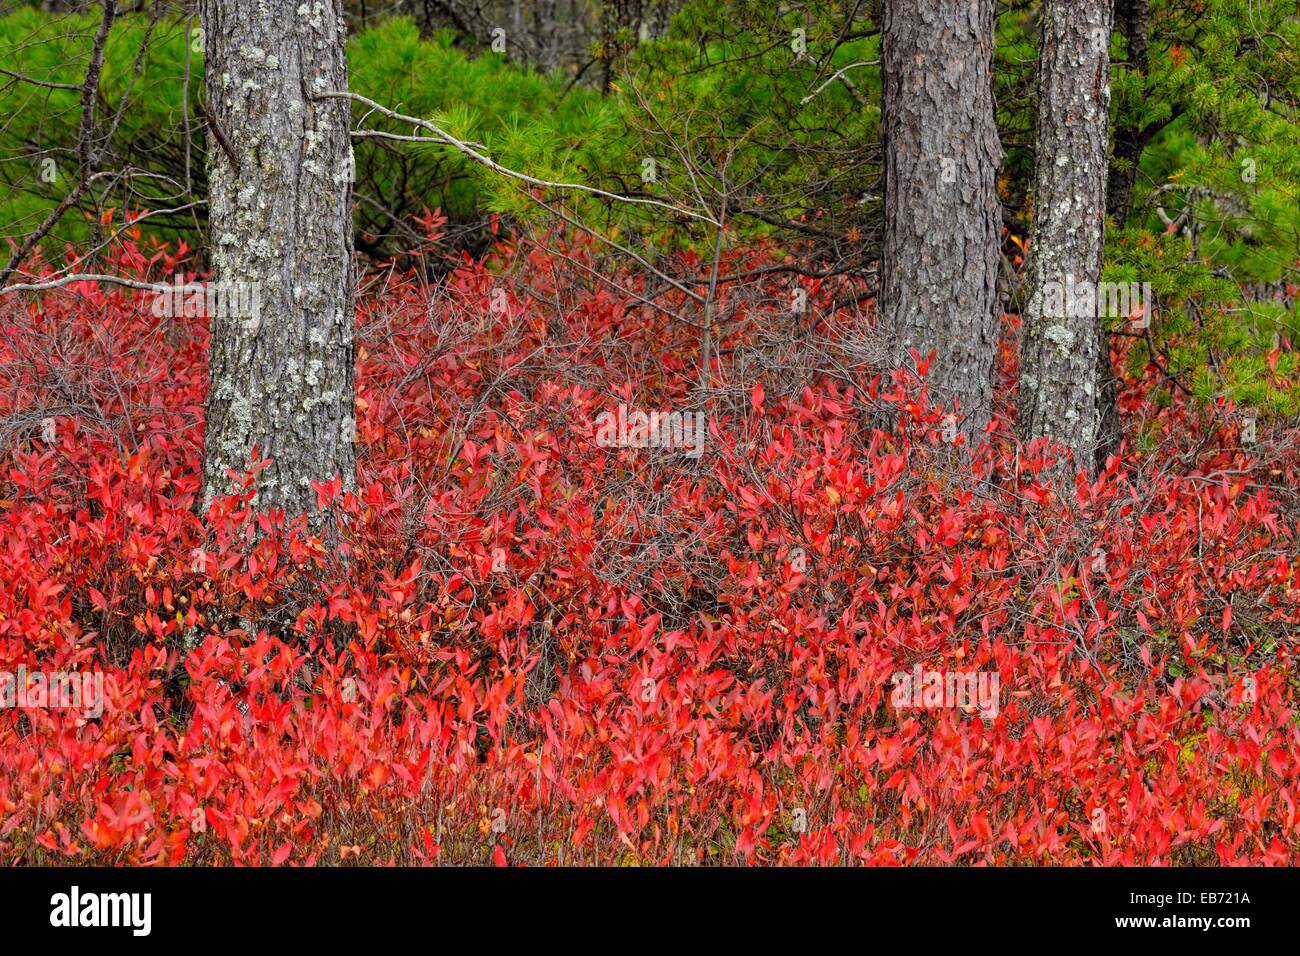 Autumn Blueberry Vaccinium Angustifolium Shrubs Under Pine Trees Stock Photo Alamy